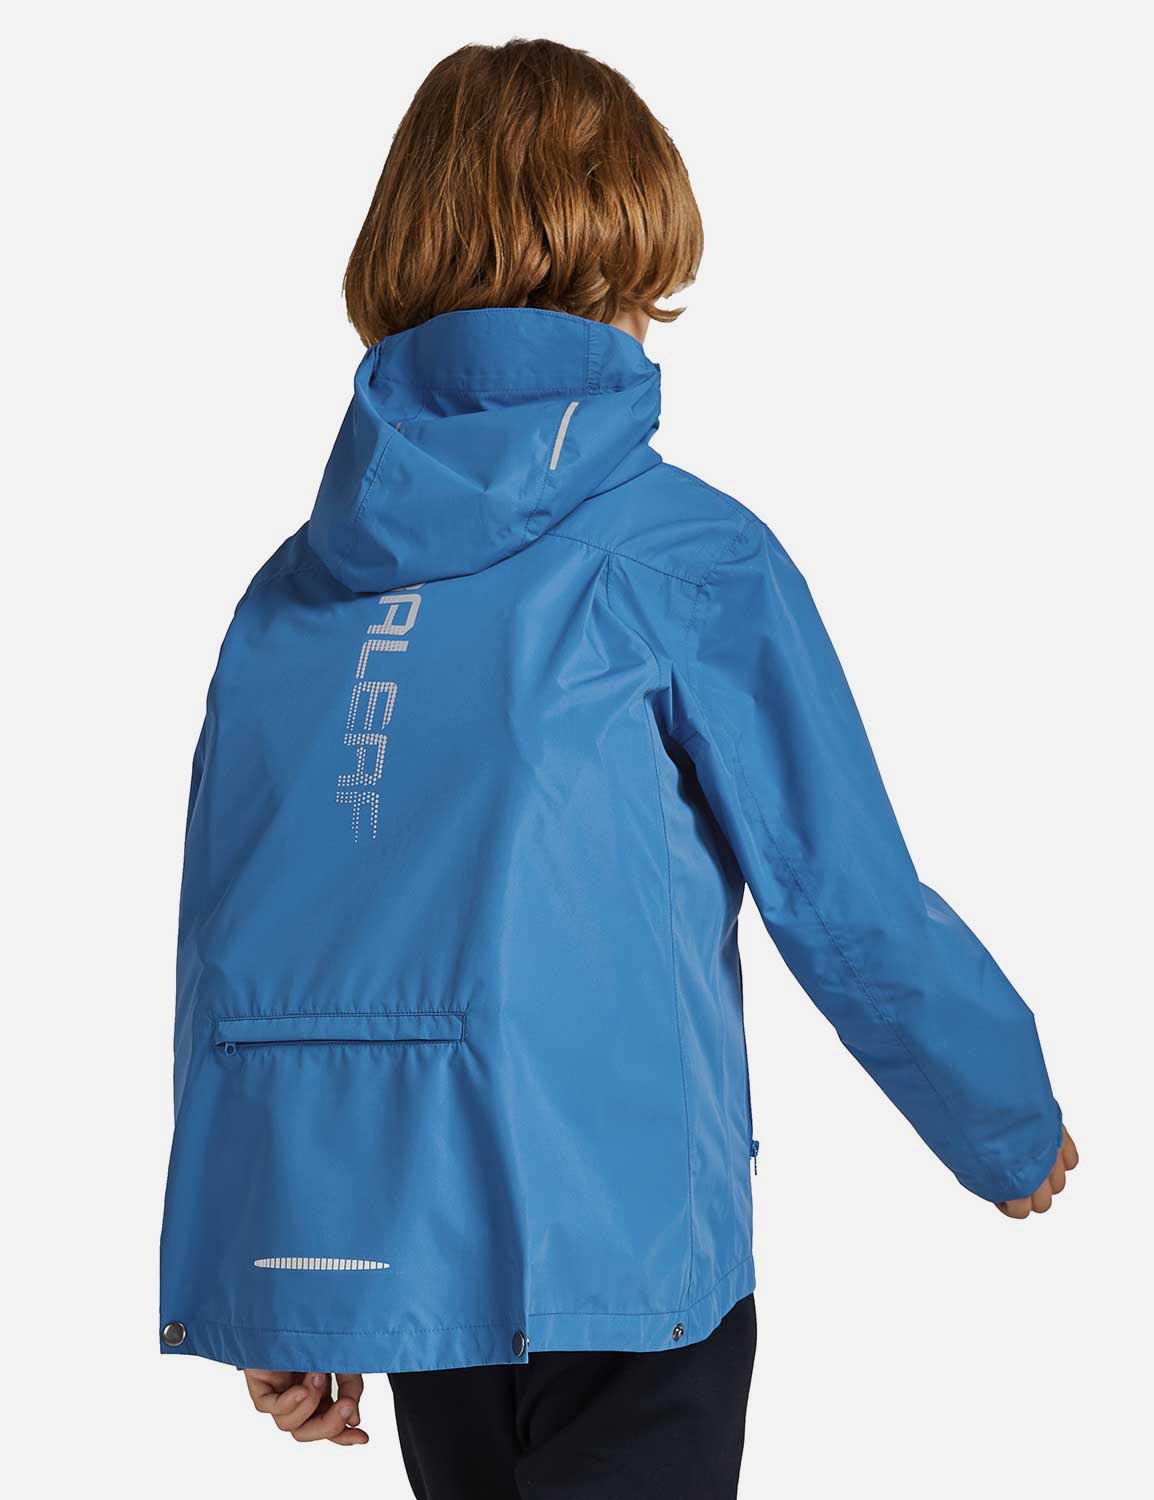 Baleaf Kid's Waterproof Outdoor Hooded Cycling Rain Jacket cai037 Princess Blue Back Detail